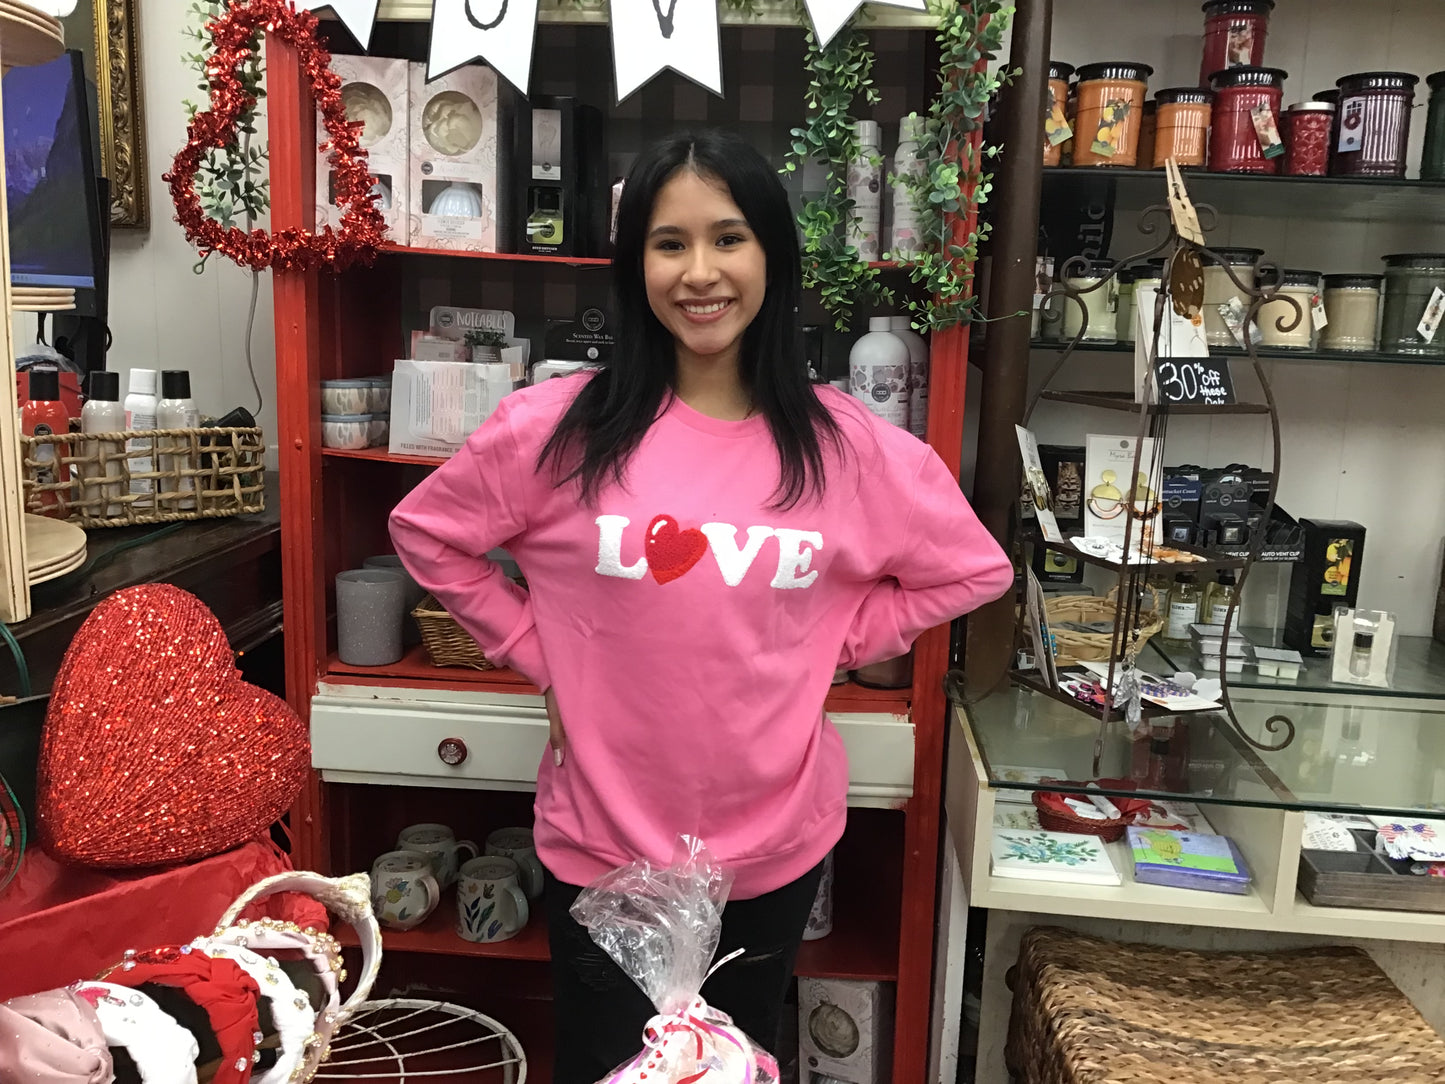 Pink Love Sweatshirt